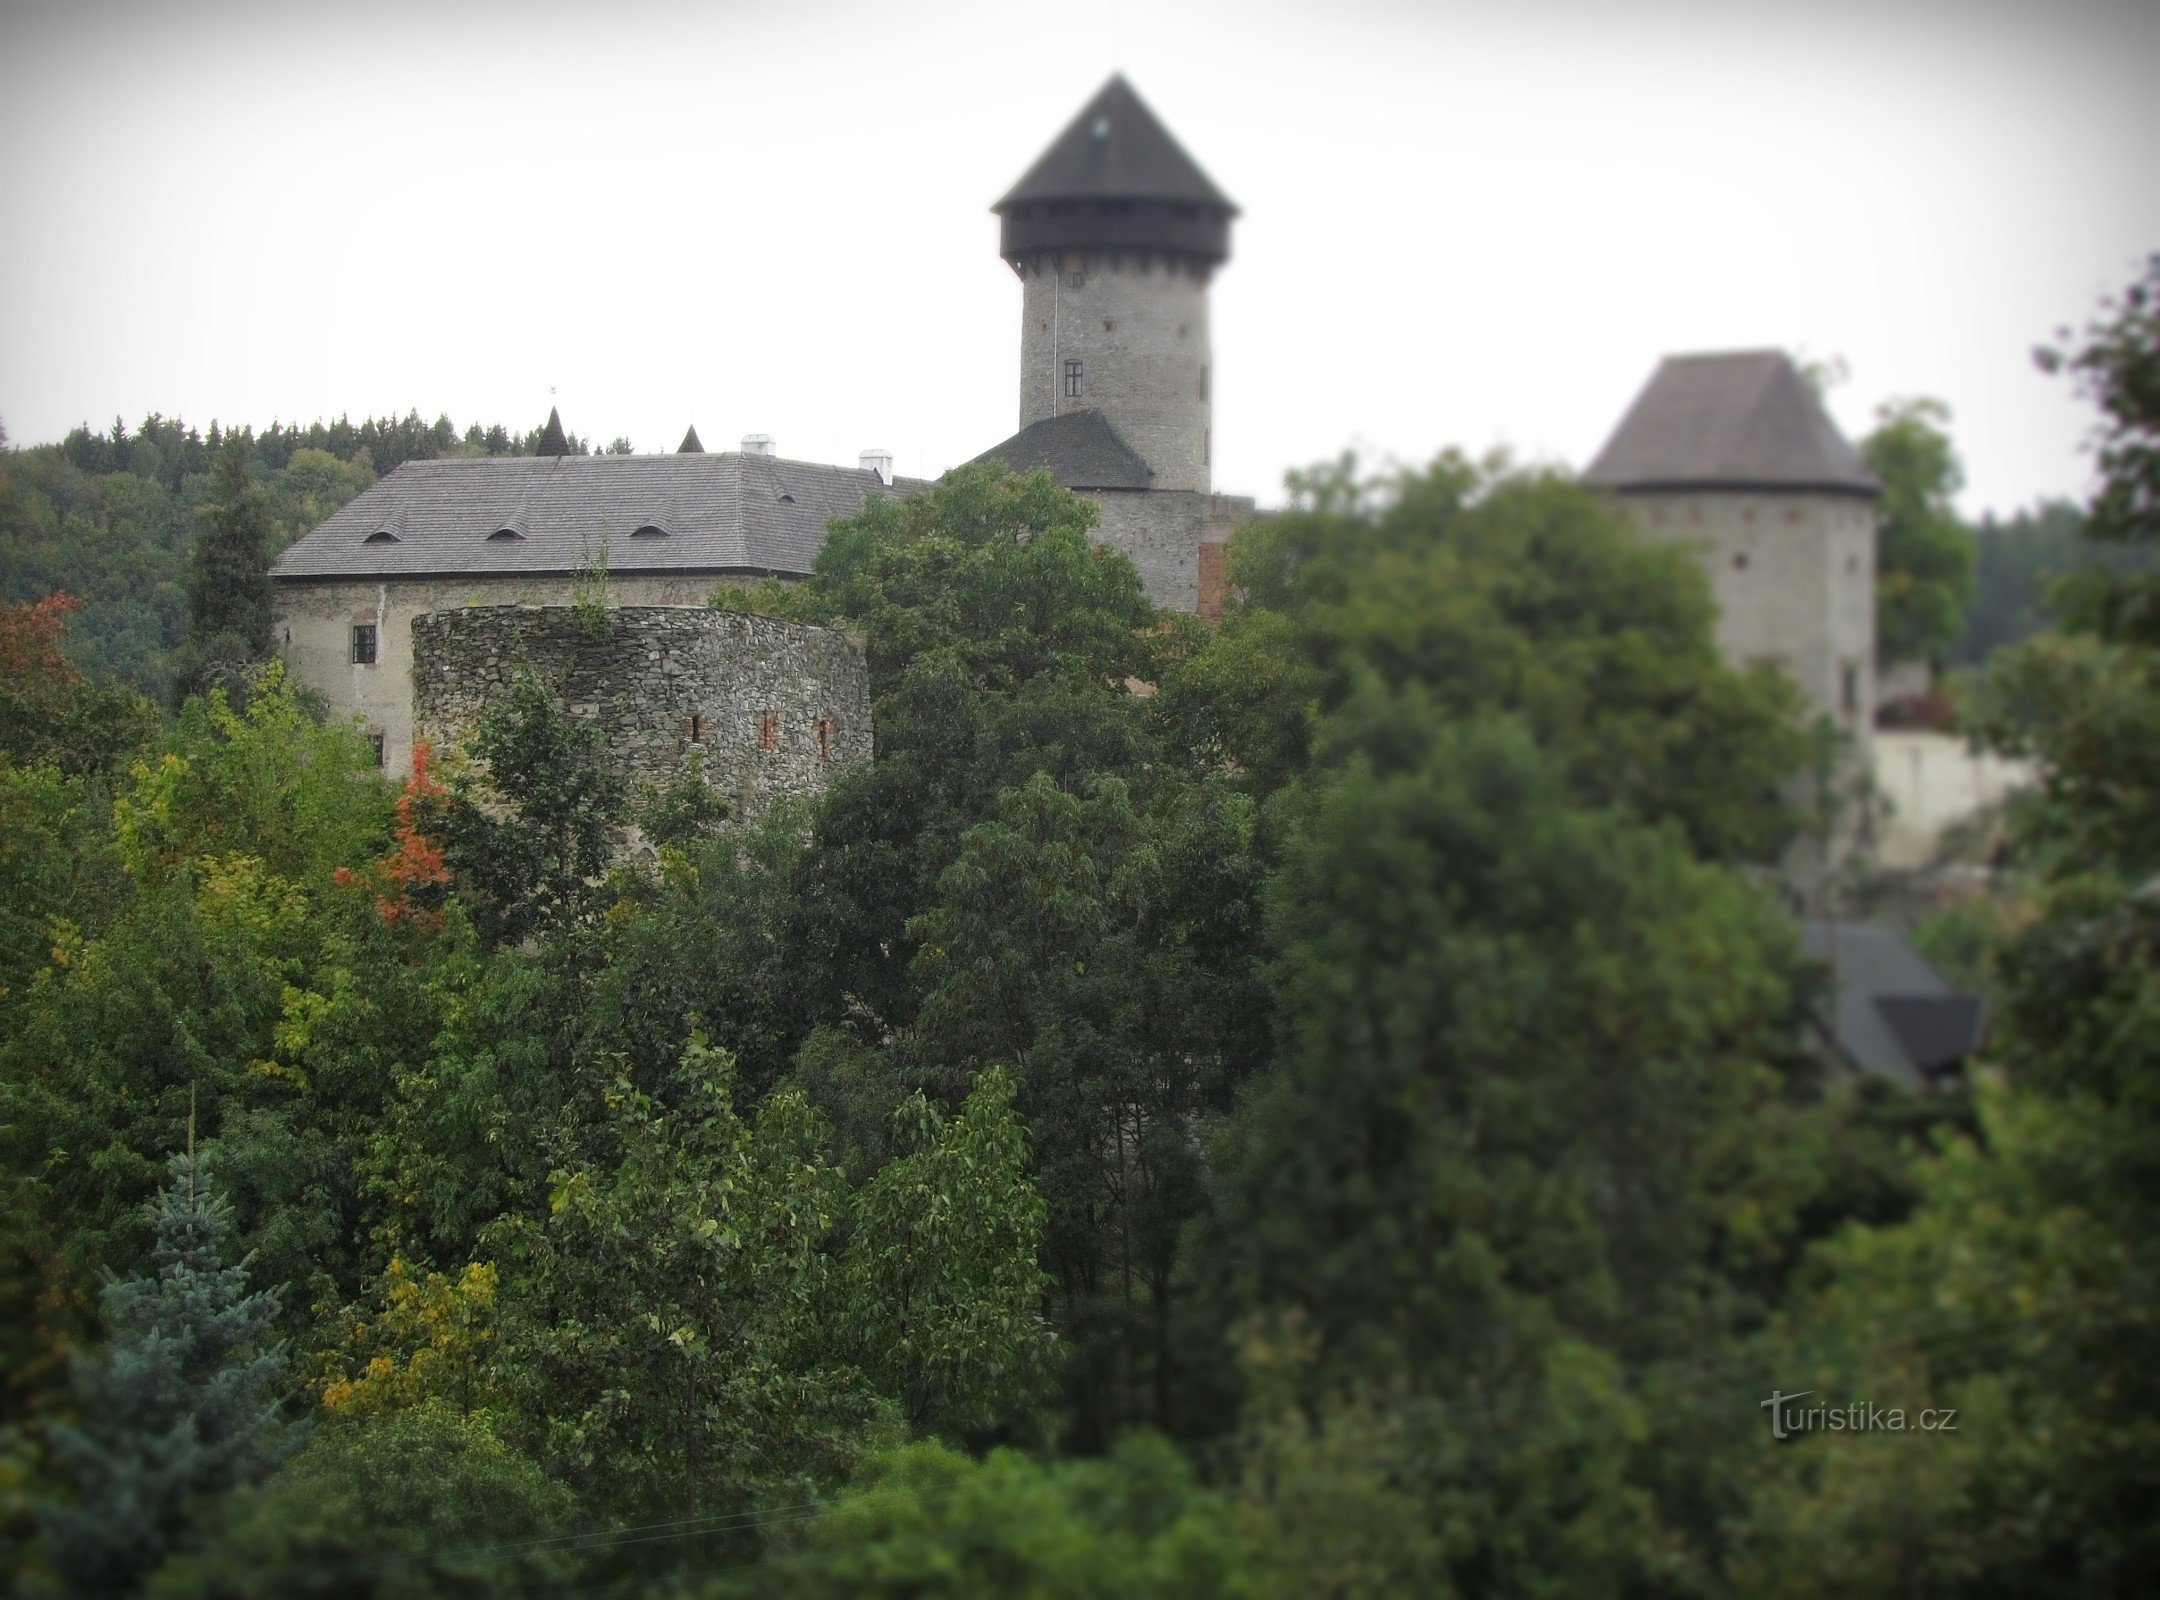 Sovinice fejlett erődítmény - Lichtejnštejnka torony